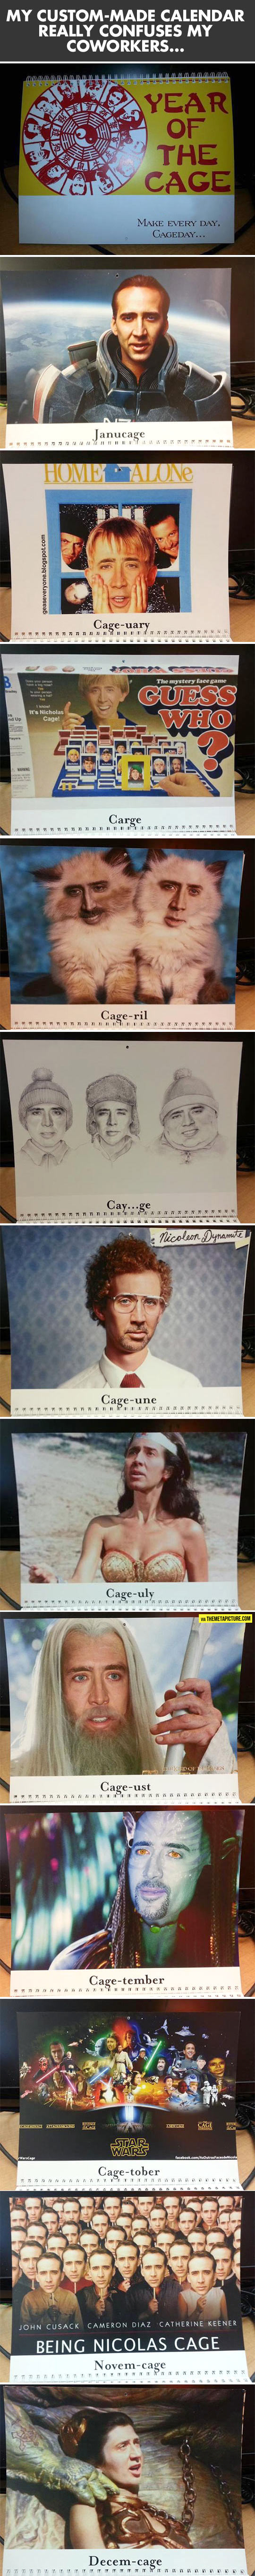 cool-Nicholas-Cage-calendar